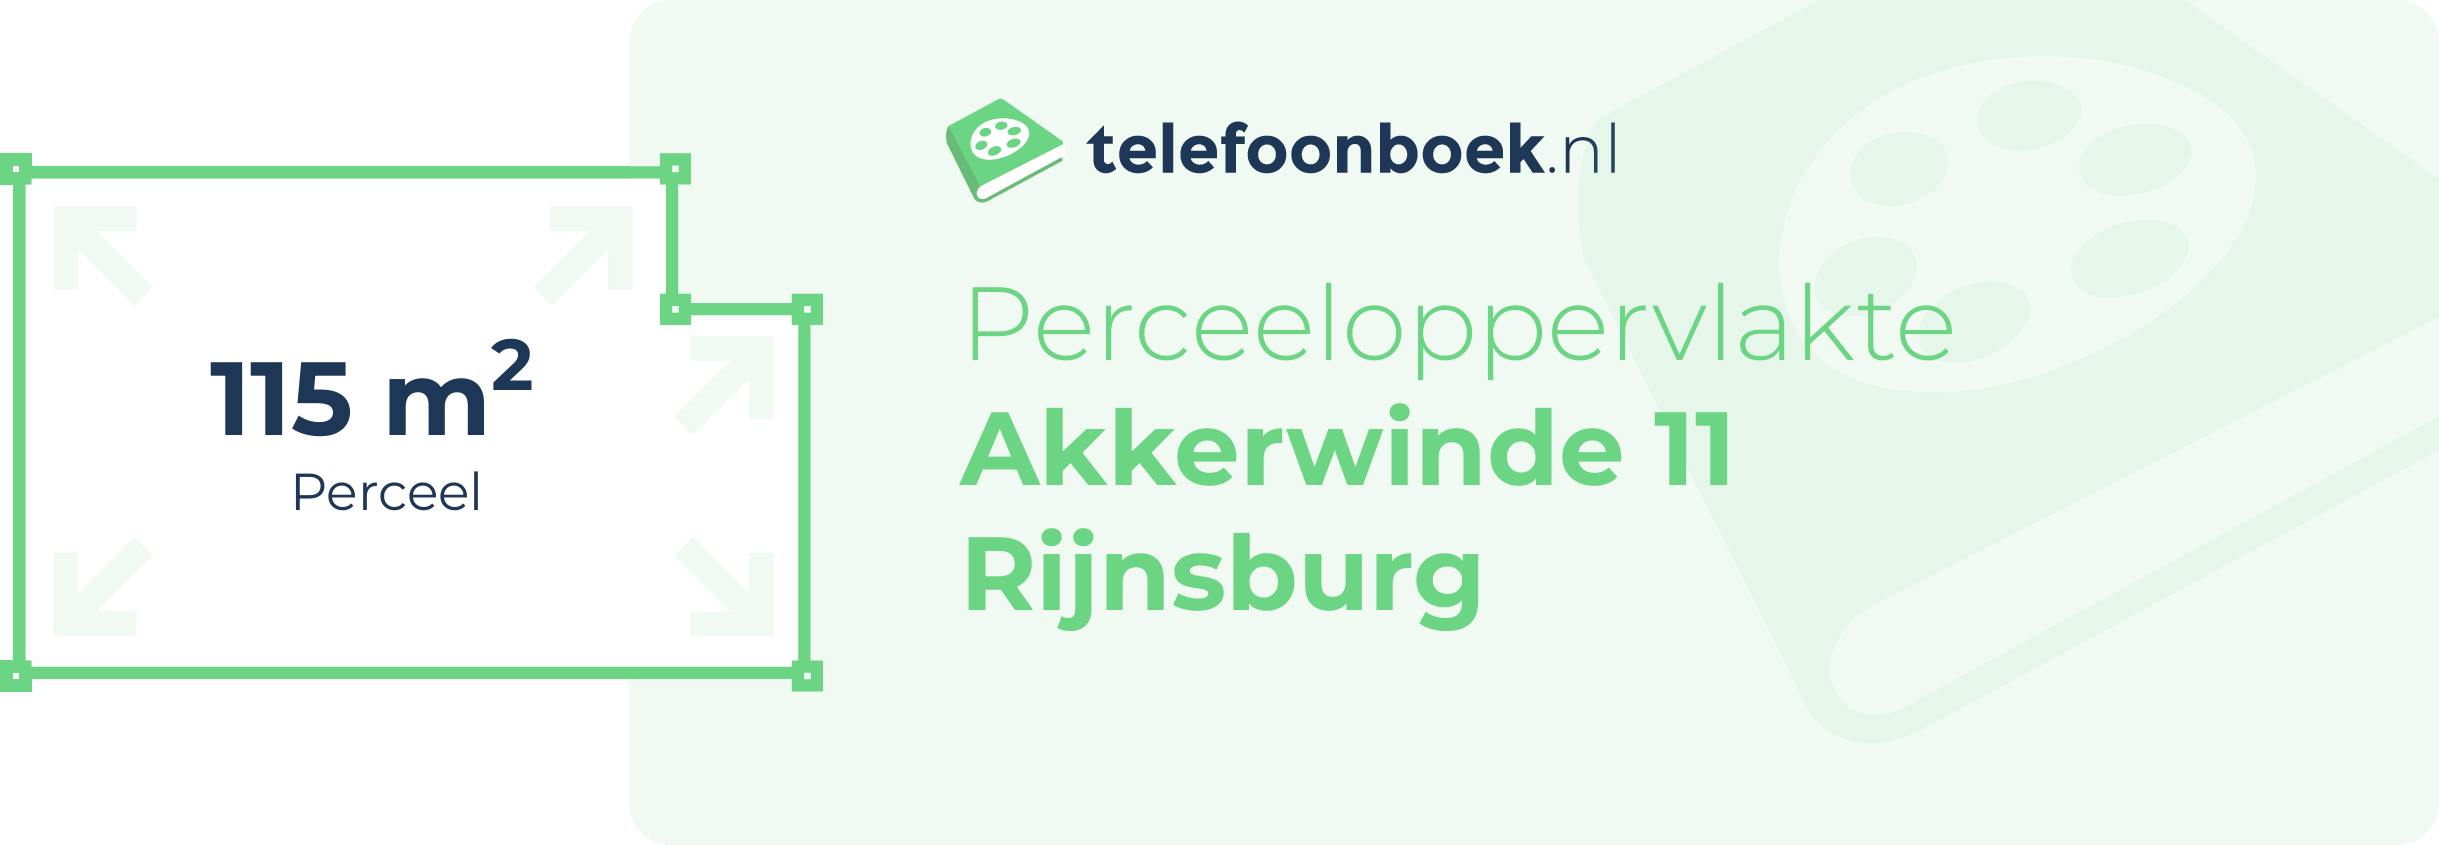 Perceeloppervlakte Akkerwinde 11 Rijnsburg